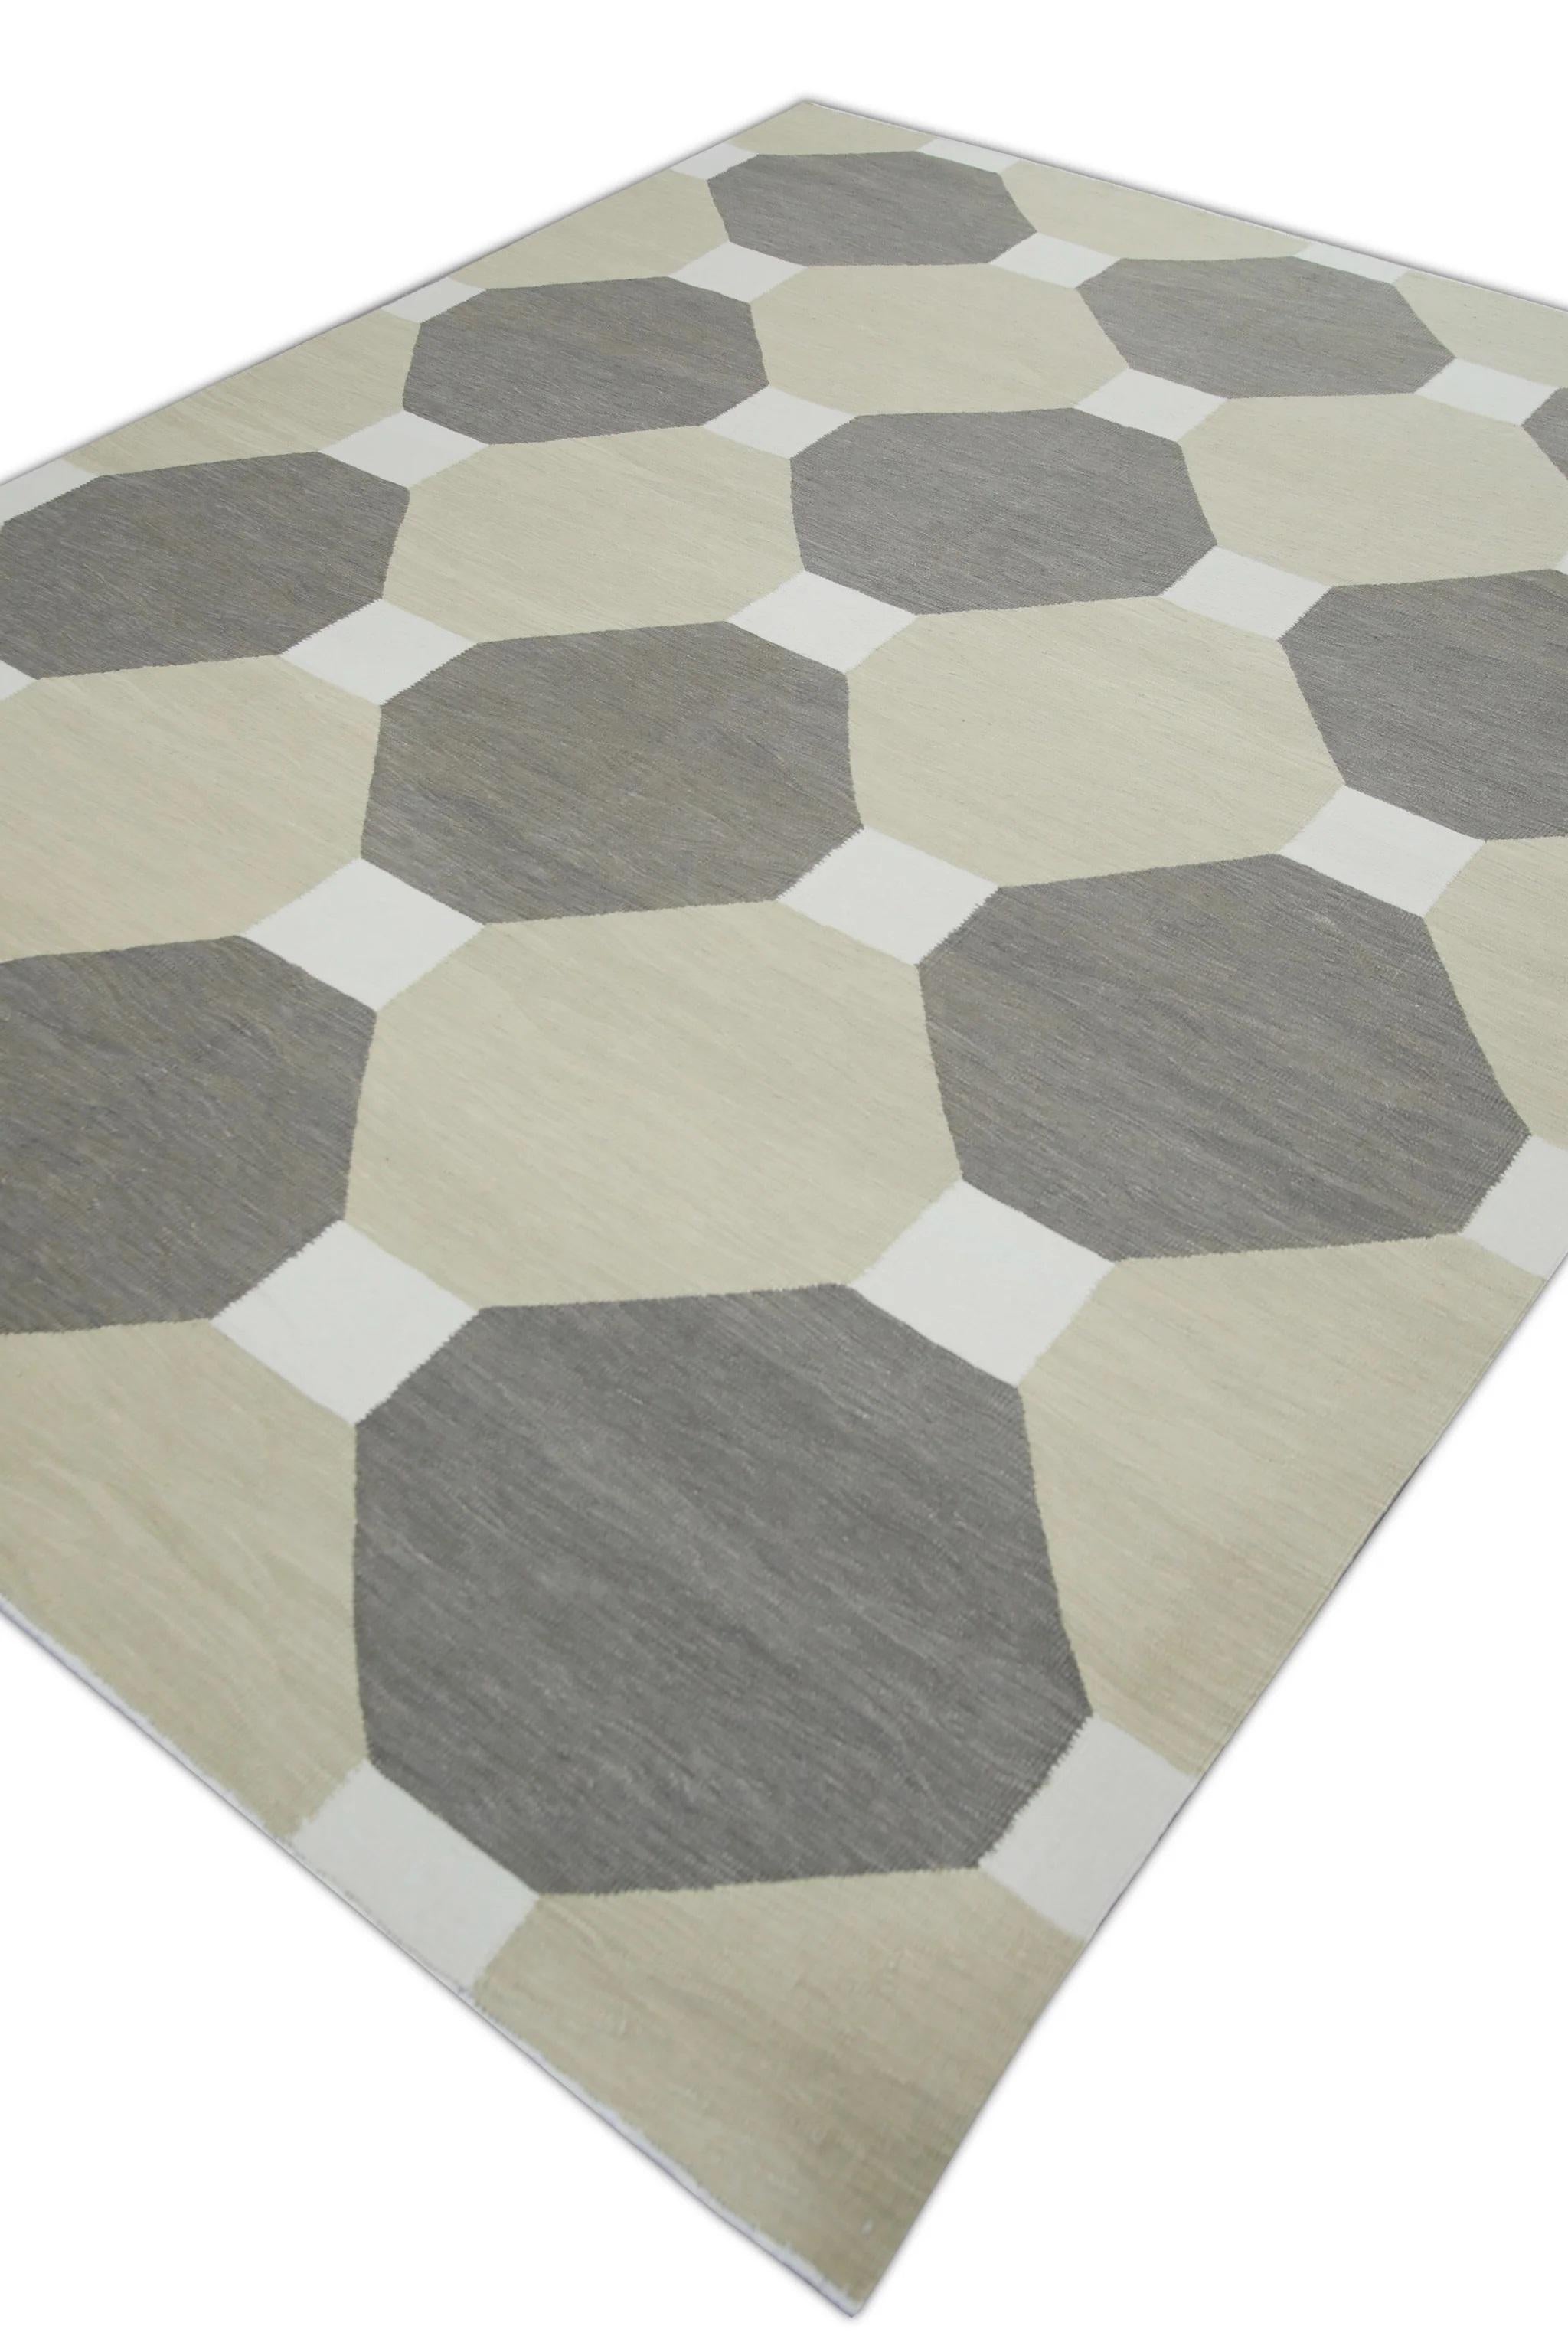 Contemporary Tan and Brown Flatweave Handmade Wool Rug in Geometric Pattern 8' X 10'4